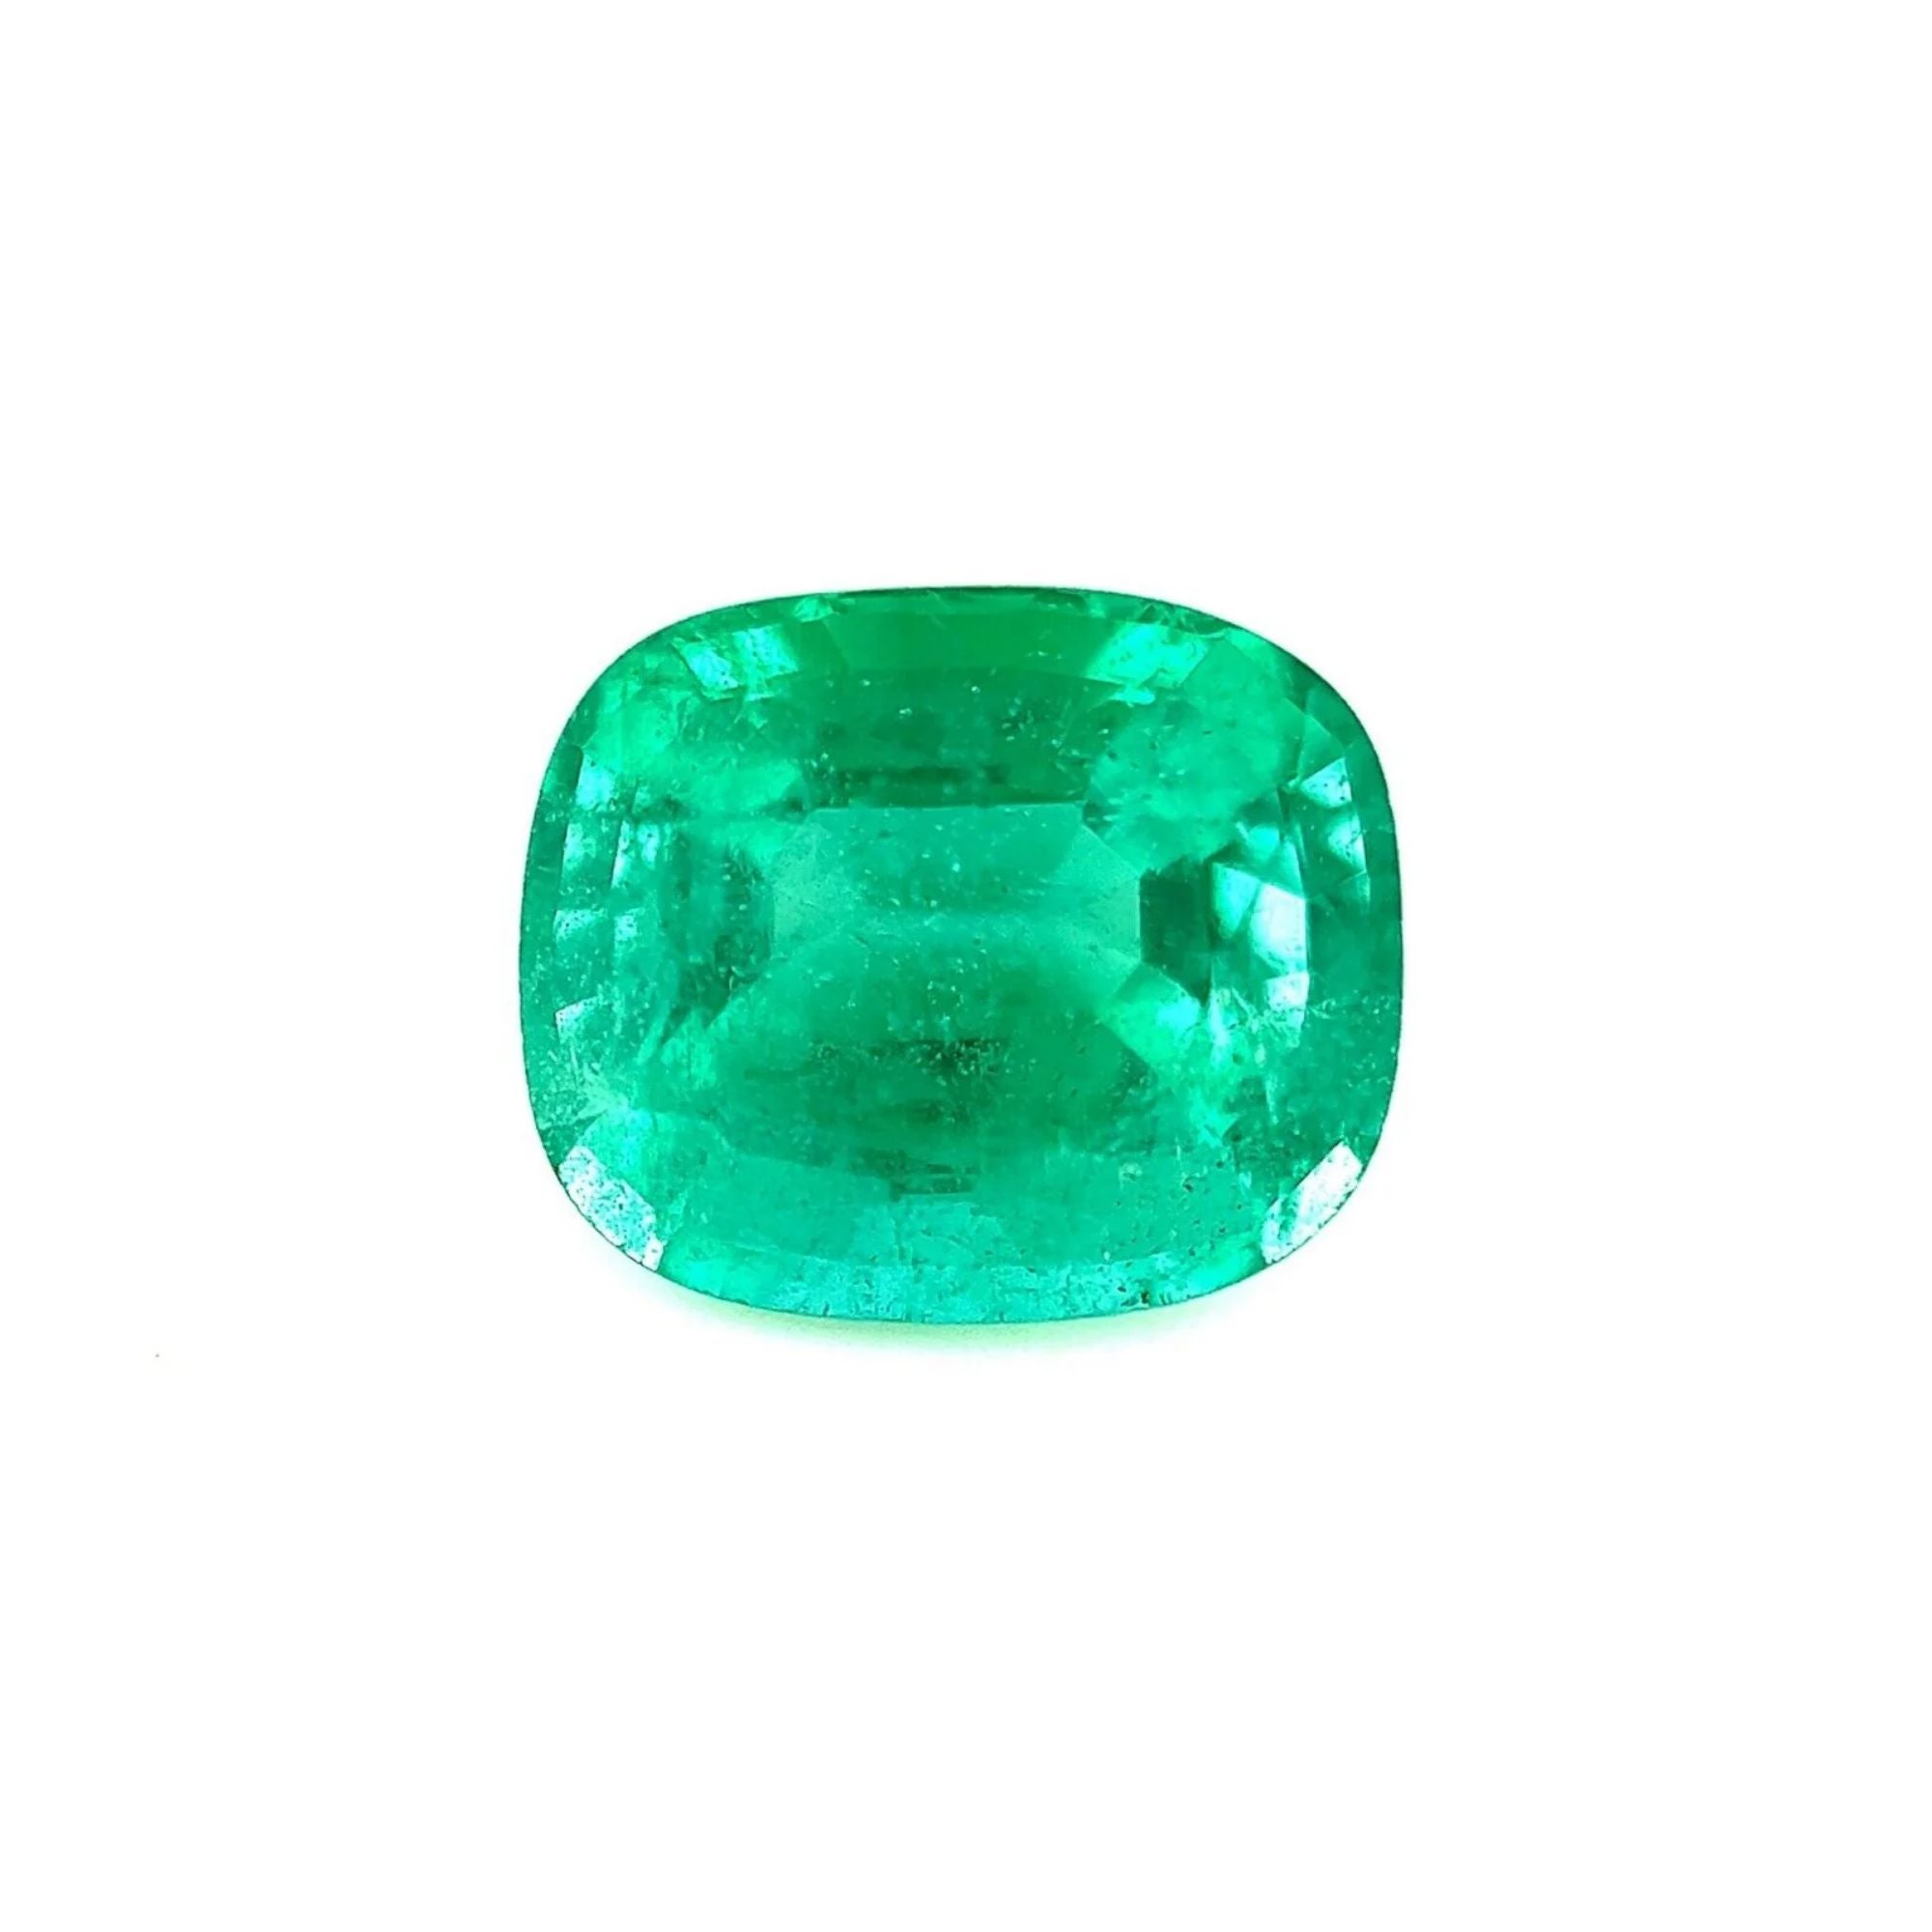 Émeraude naturelle de 3,15 carats, taille coussin vert vif rare, 9,7 x 8,2 mm